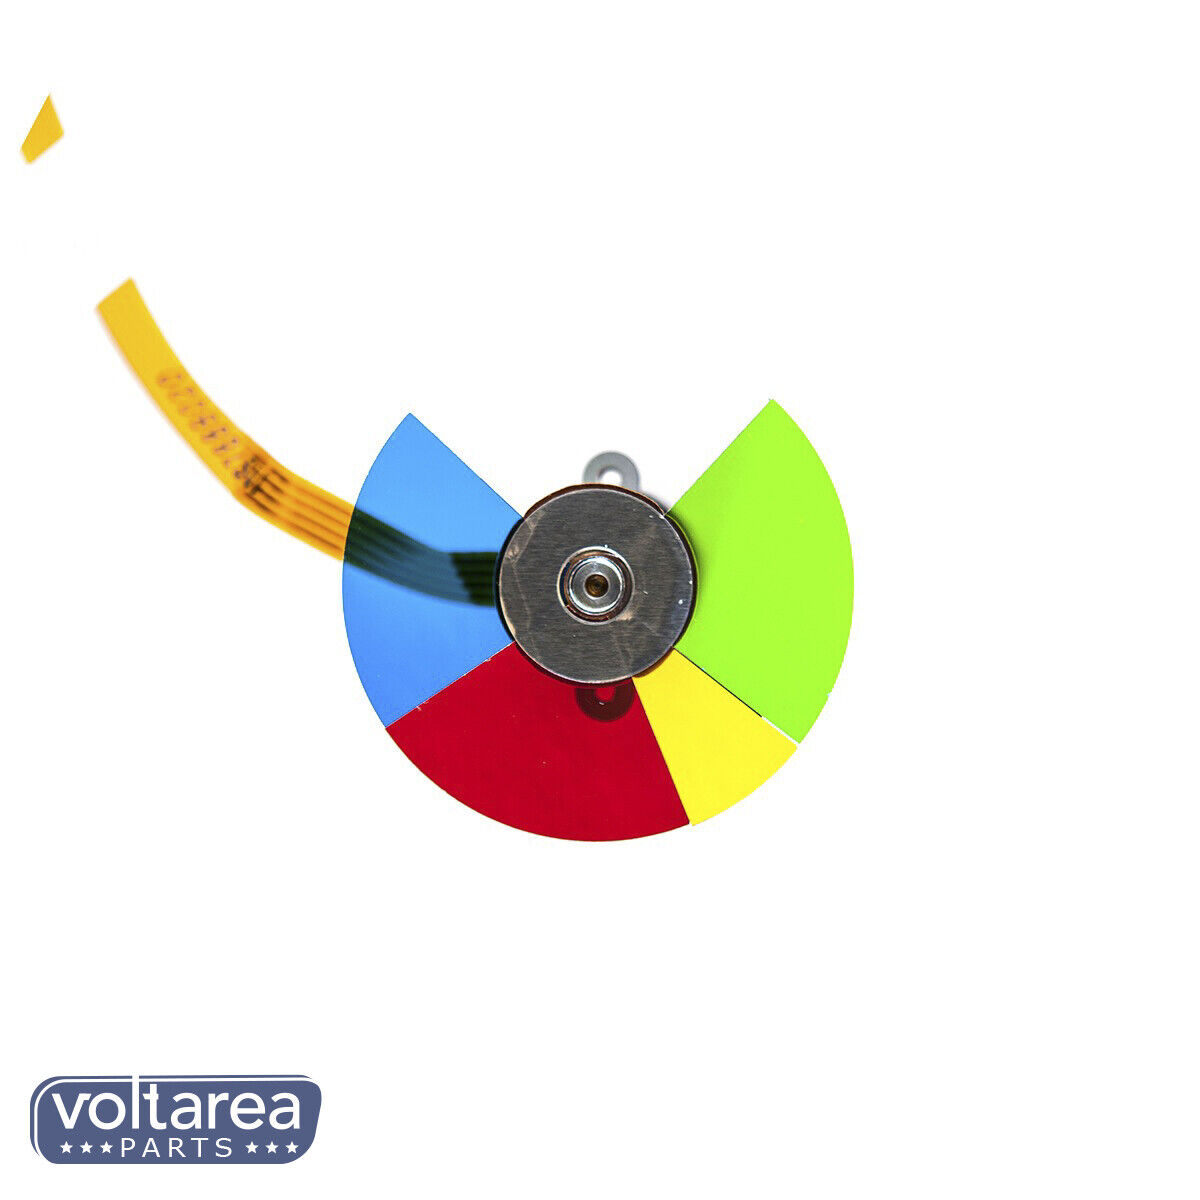 OEM Original Color Wheel for Viewsonic pjdw6544w Projector USA